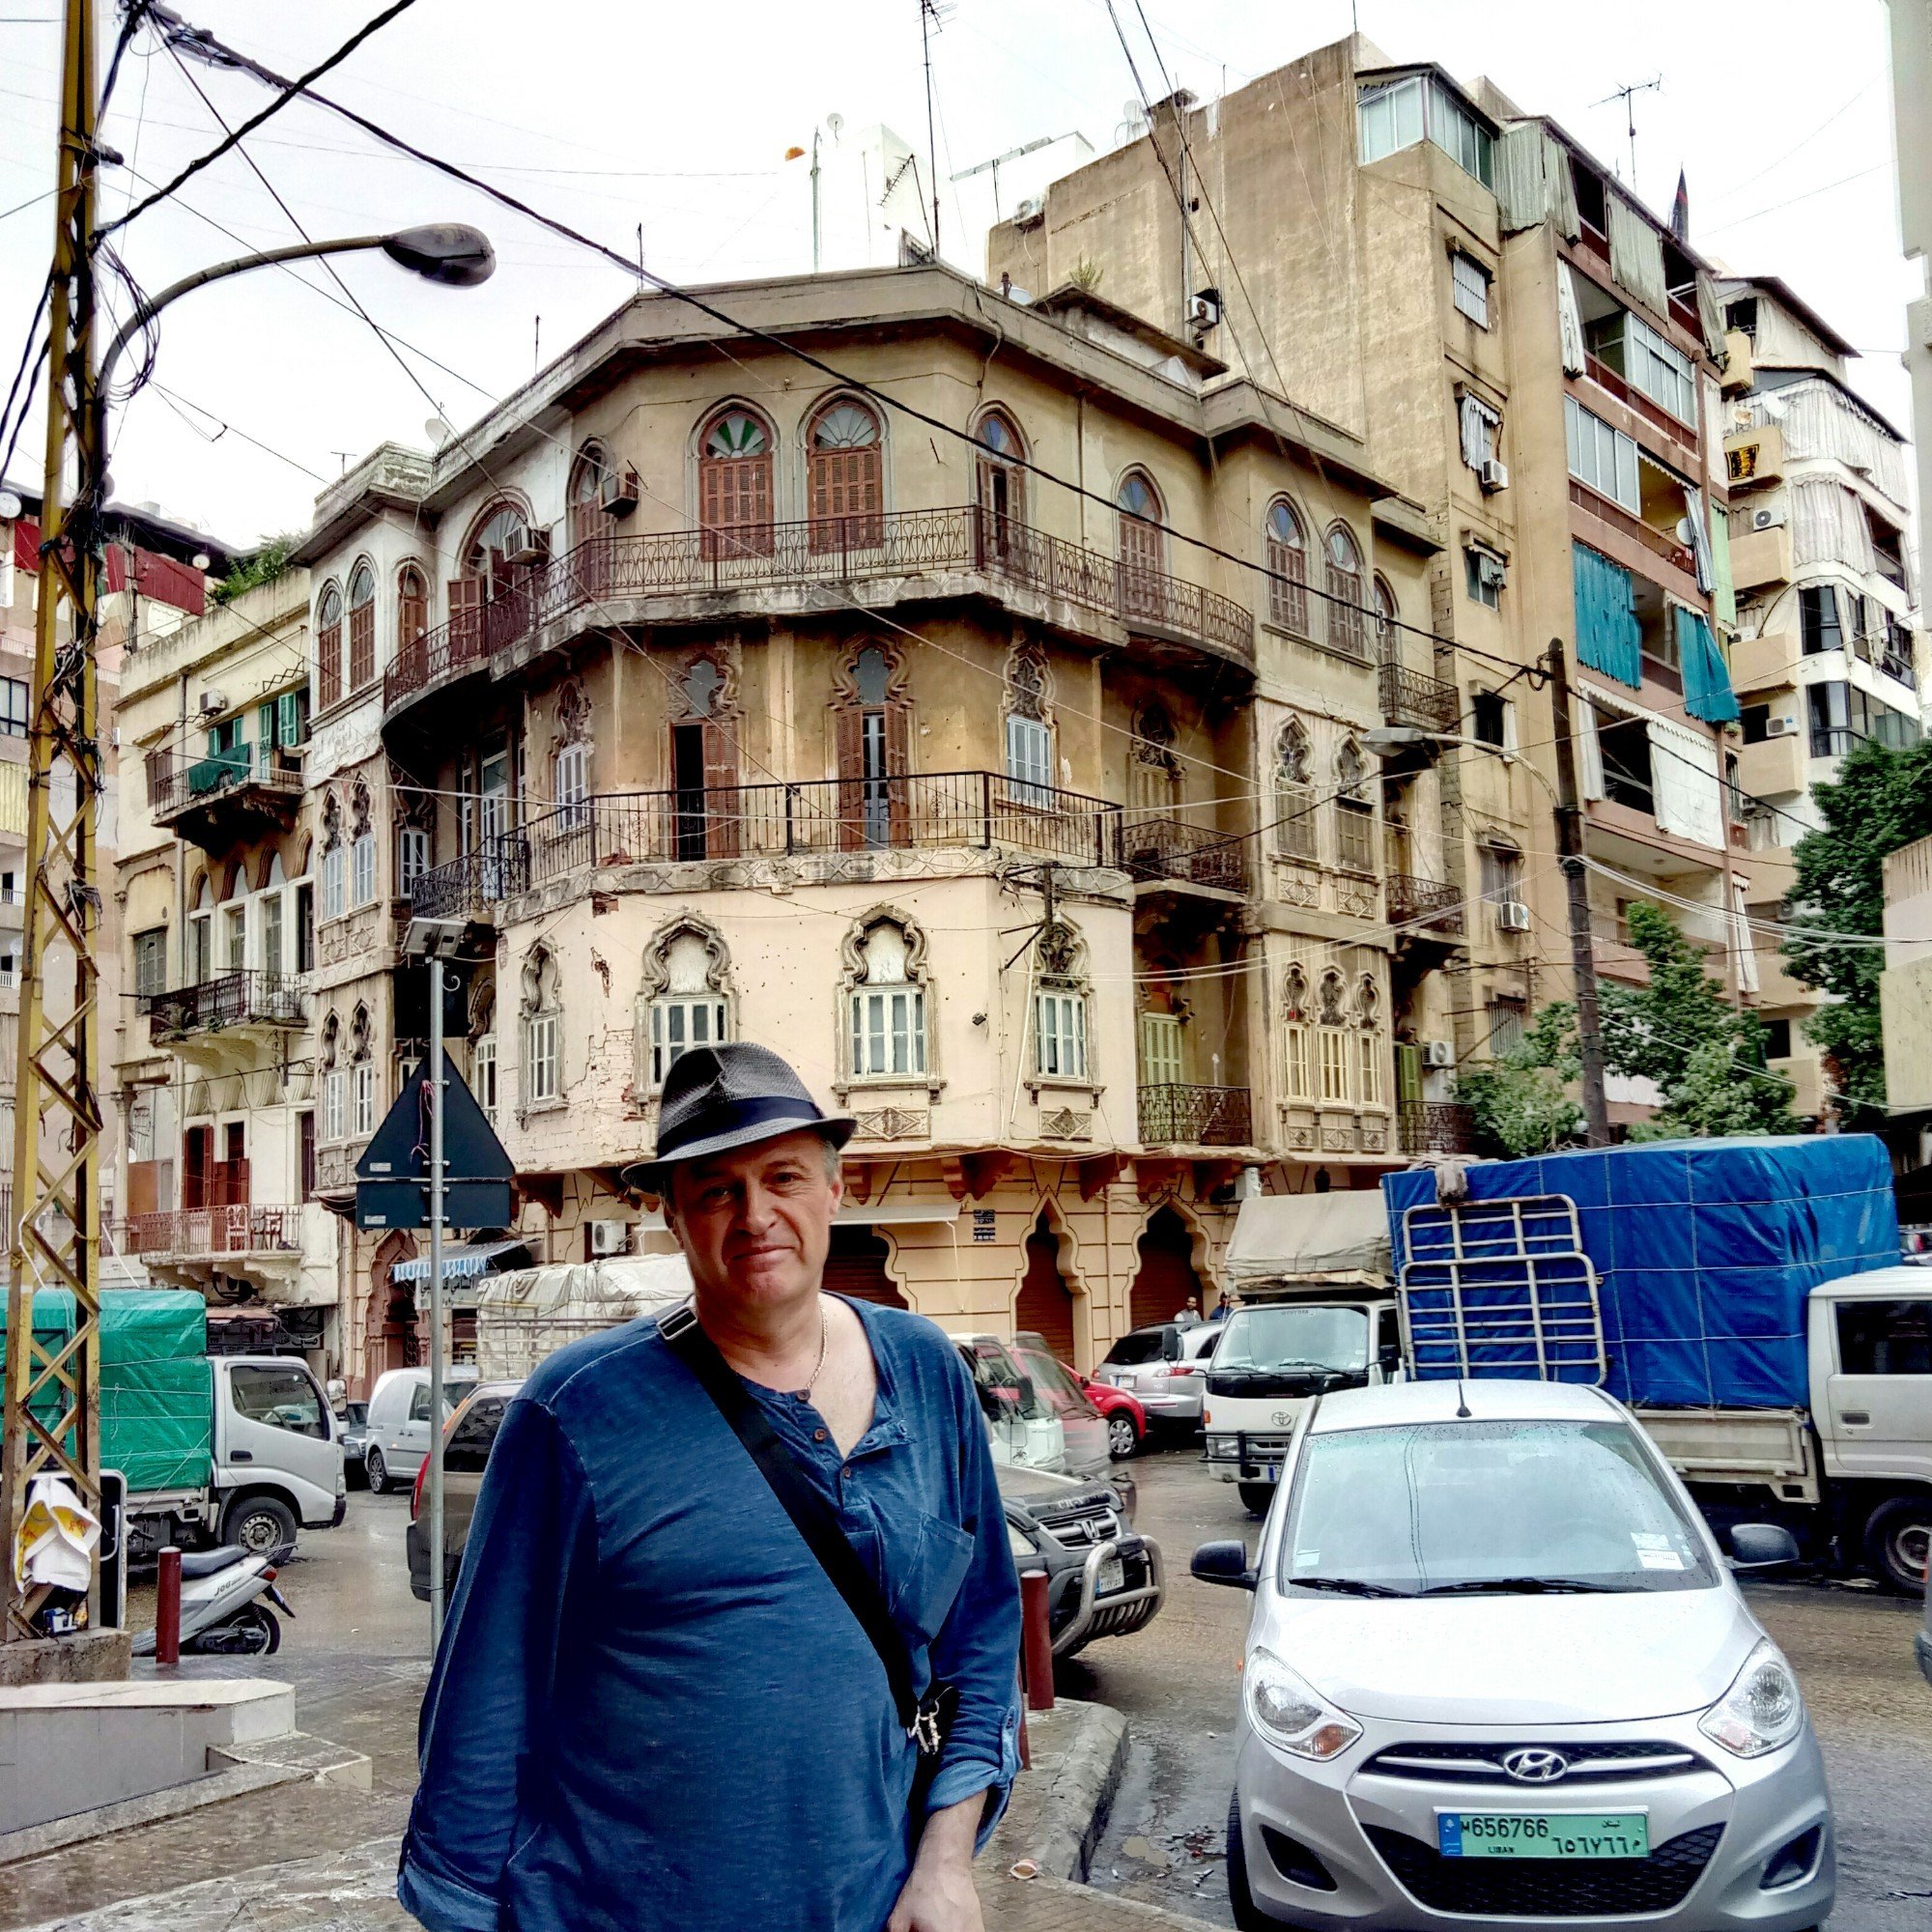 Телефона бейрут. Бейрут бедный квартал. Ливан Бейрут трущобы. Ливан столица Бейрут трущобы. Бейрут город трущобы.